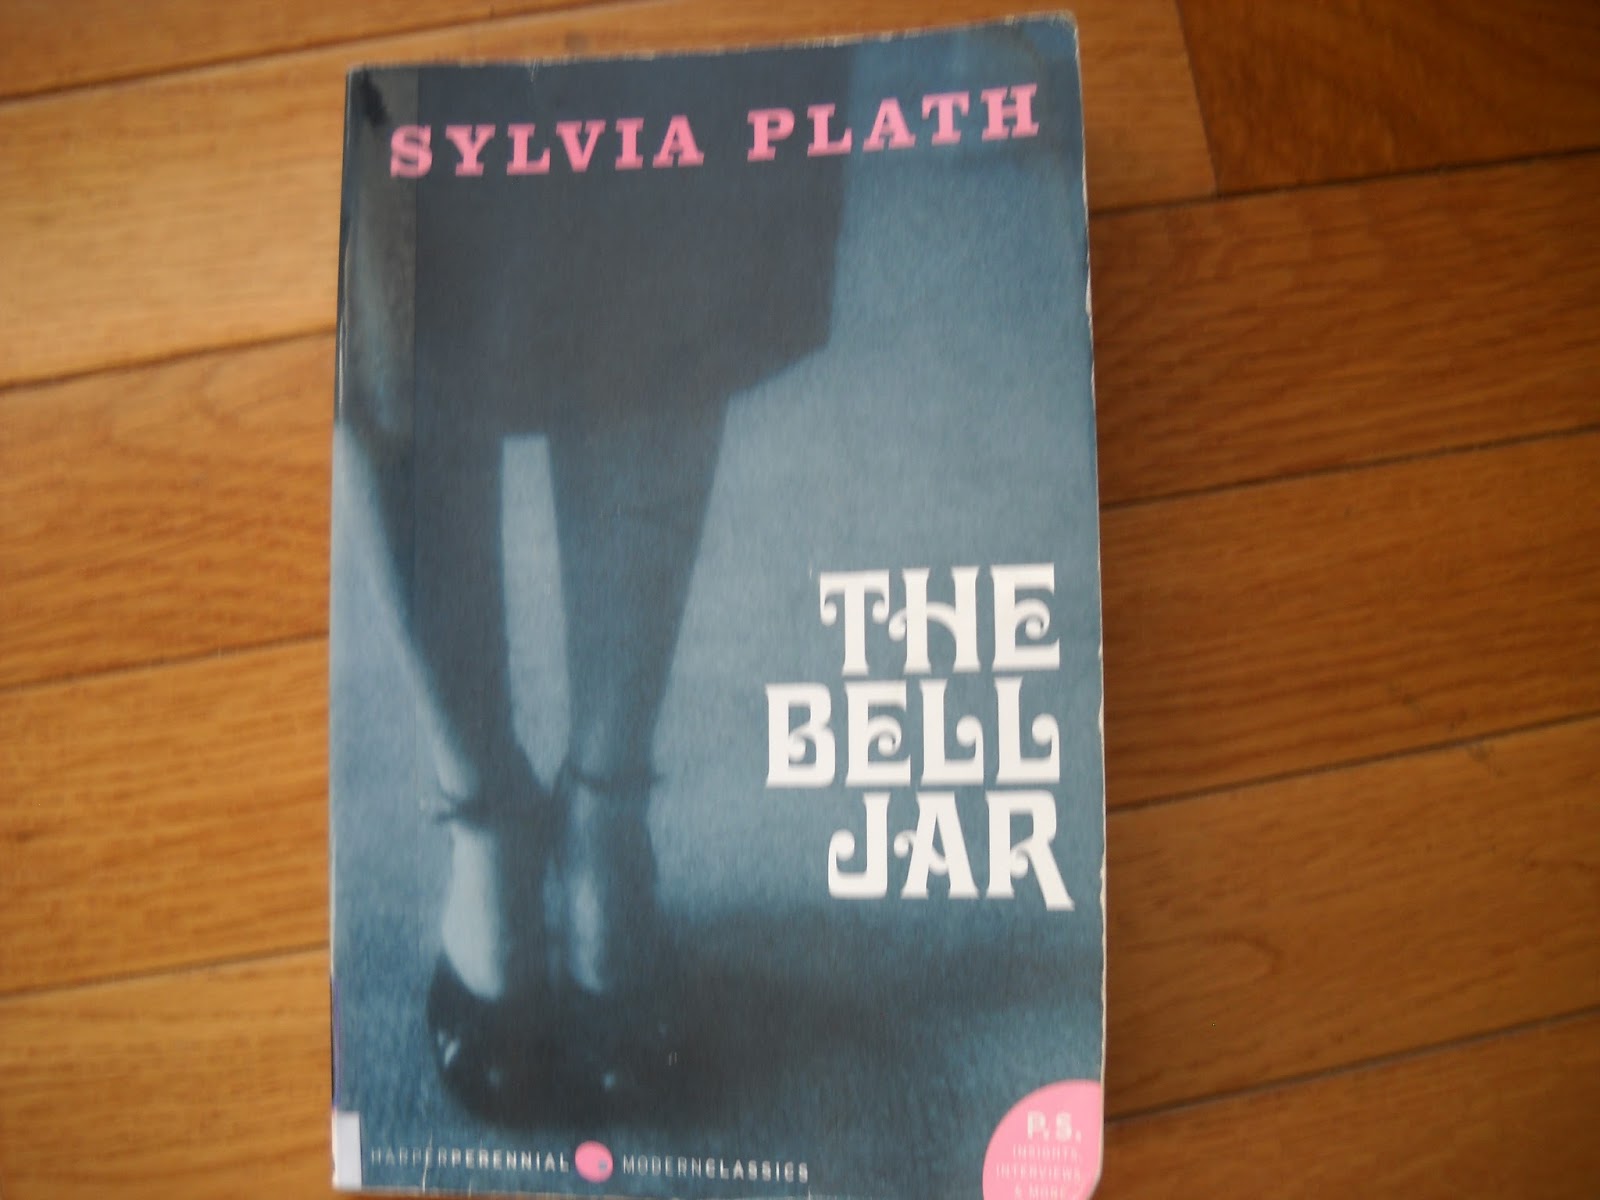 Why Did Sylvia Plath Write The Bell Jar